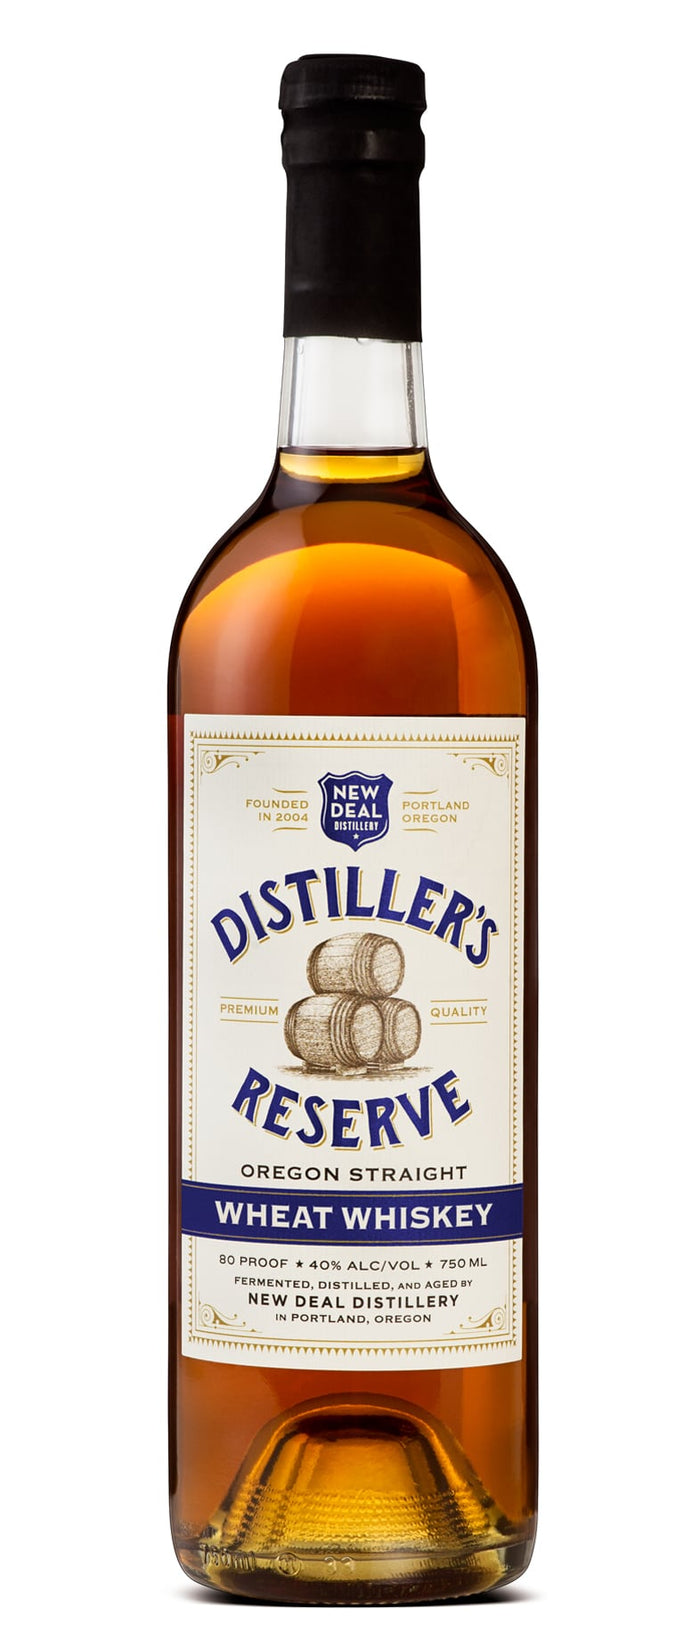 New Deal Distiller’s Reserve Oregon Straight Wheat Whiskey